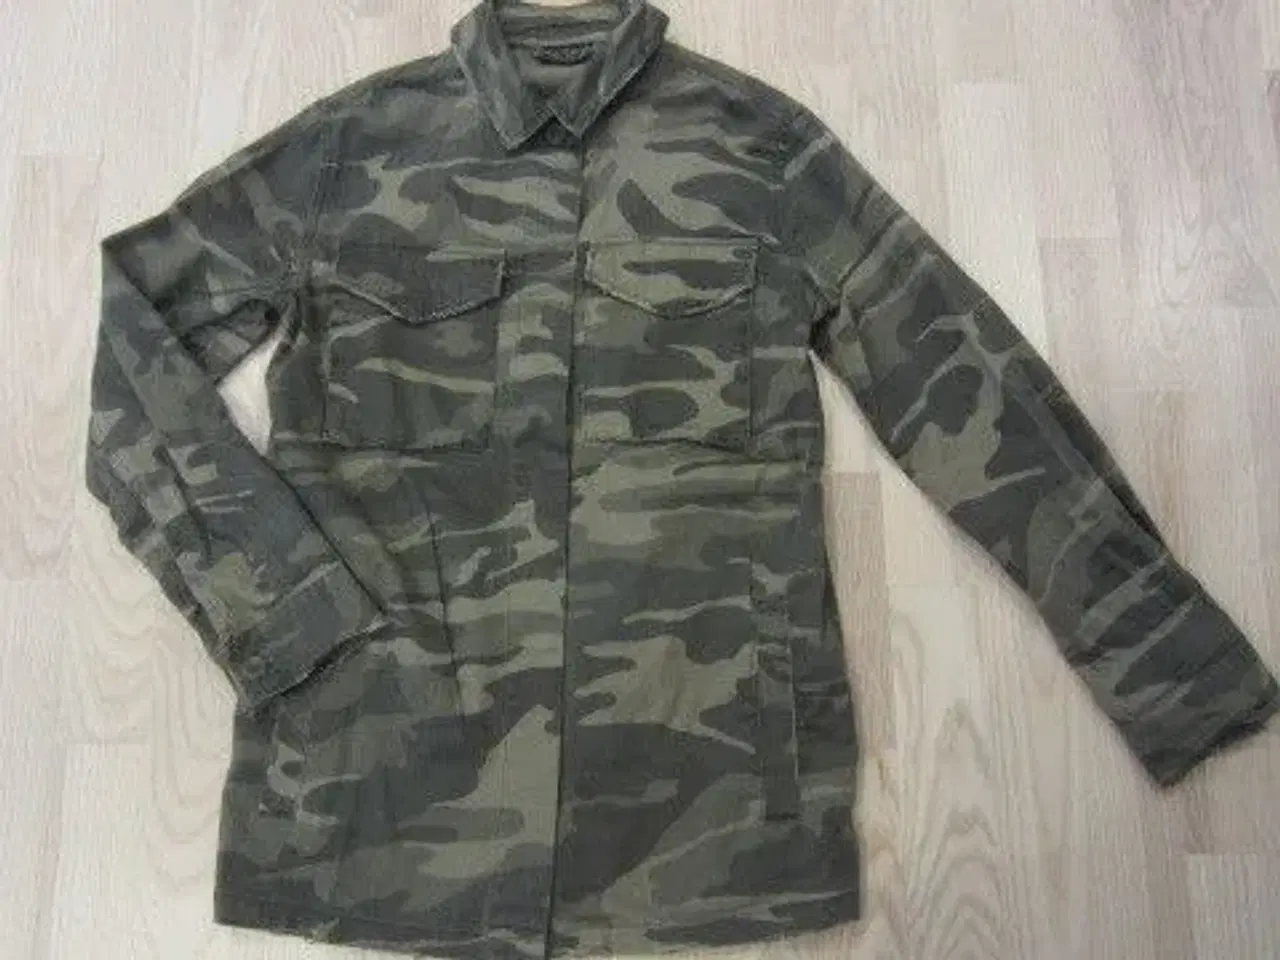 Billede 1 - Str. 32 / UK 4, camouflage jakke